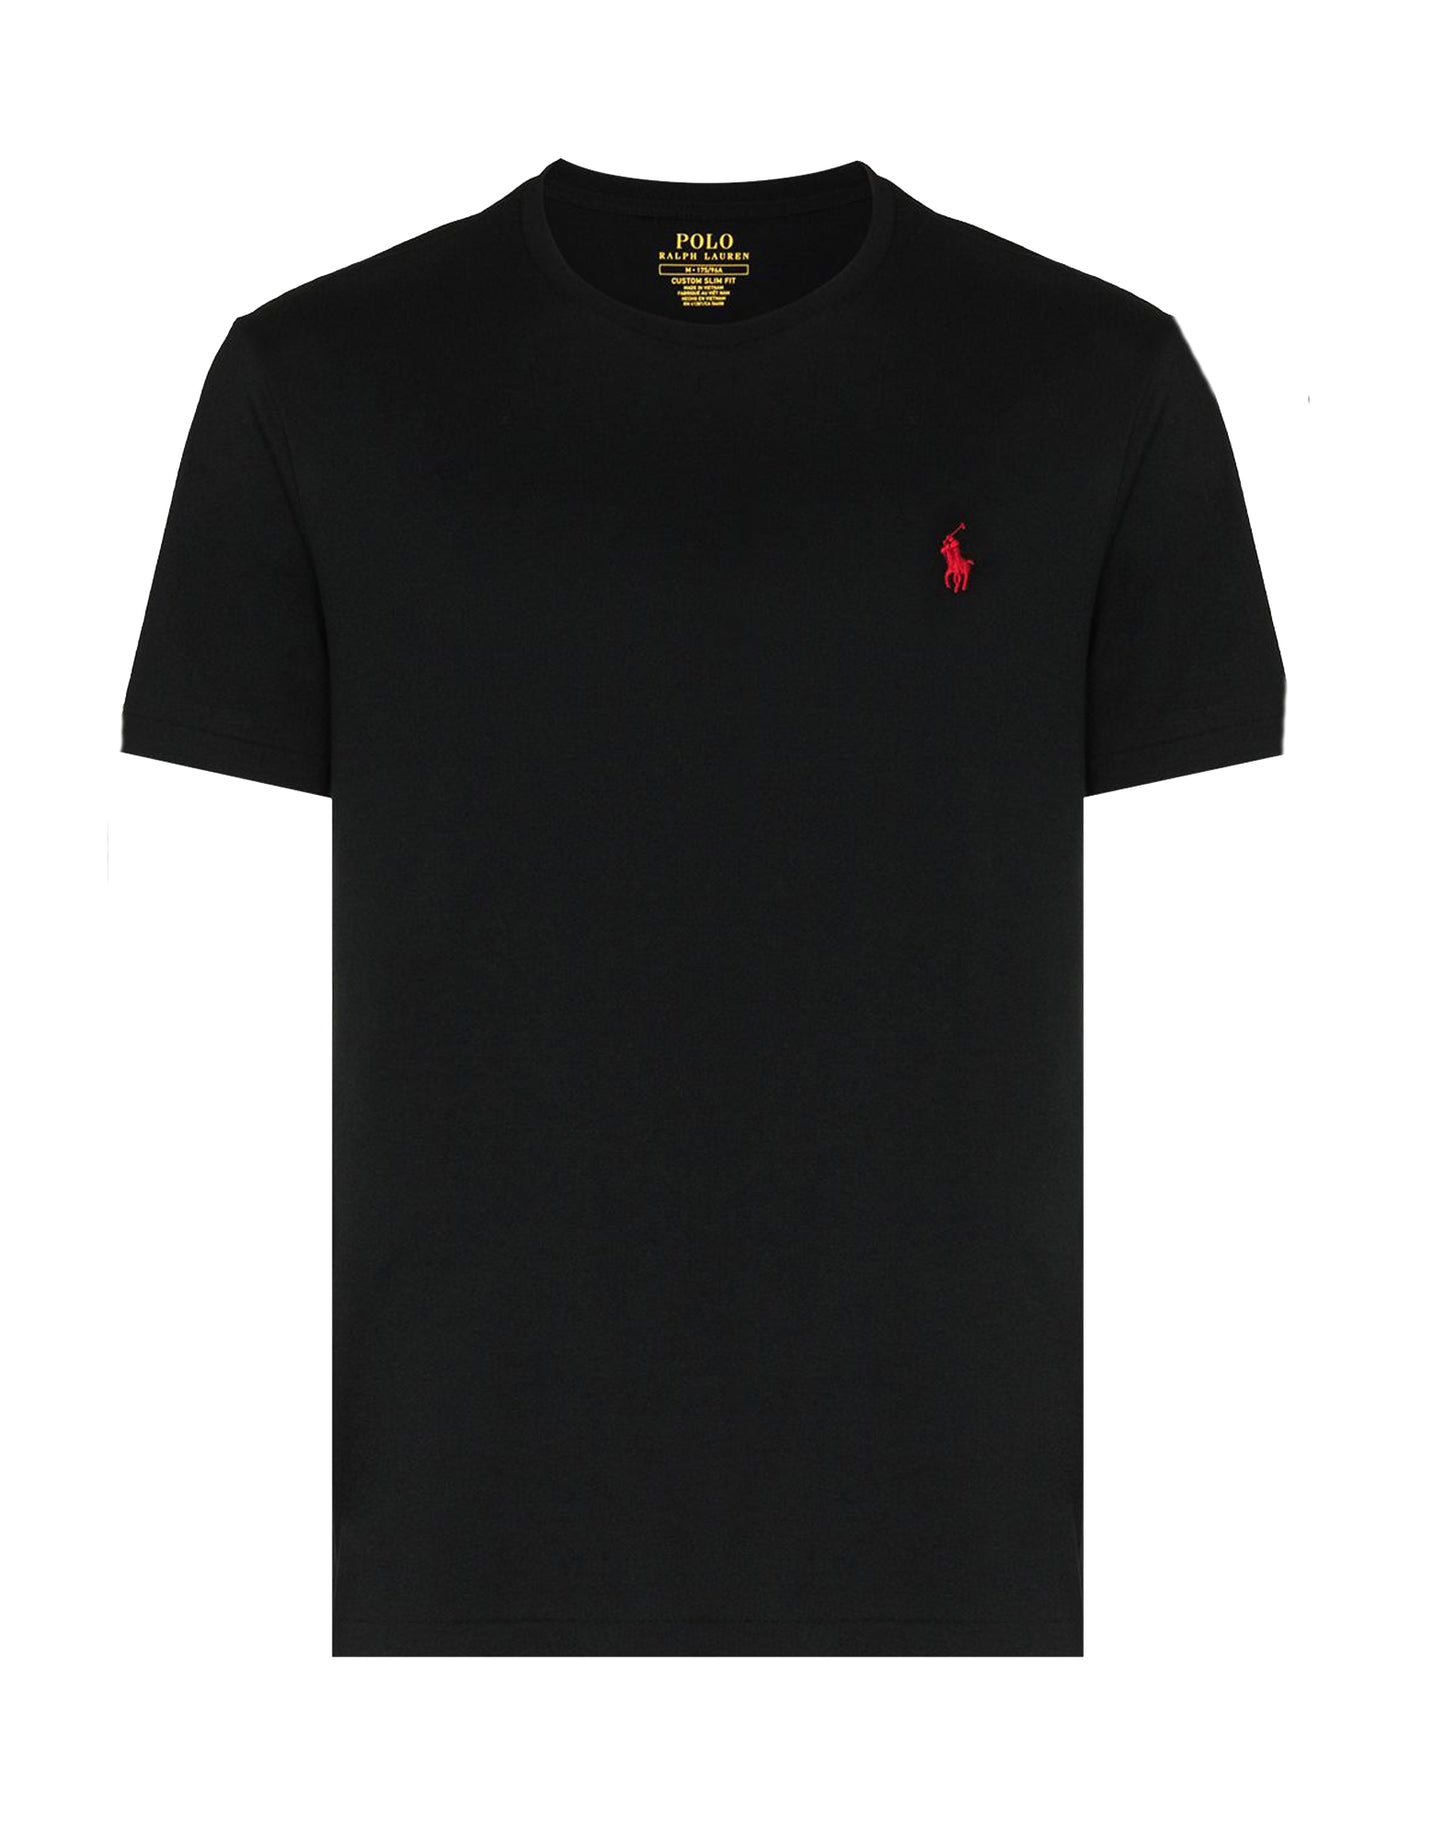 Polo Ralph Lauren Black Crew Neck T-Shirt